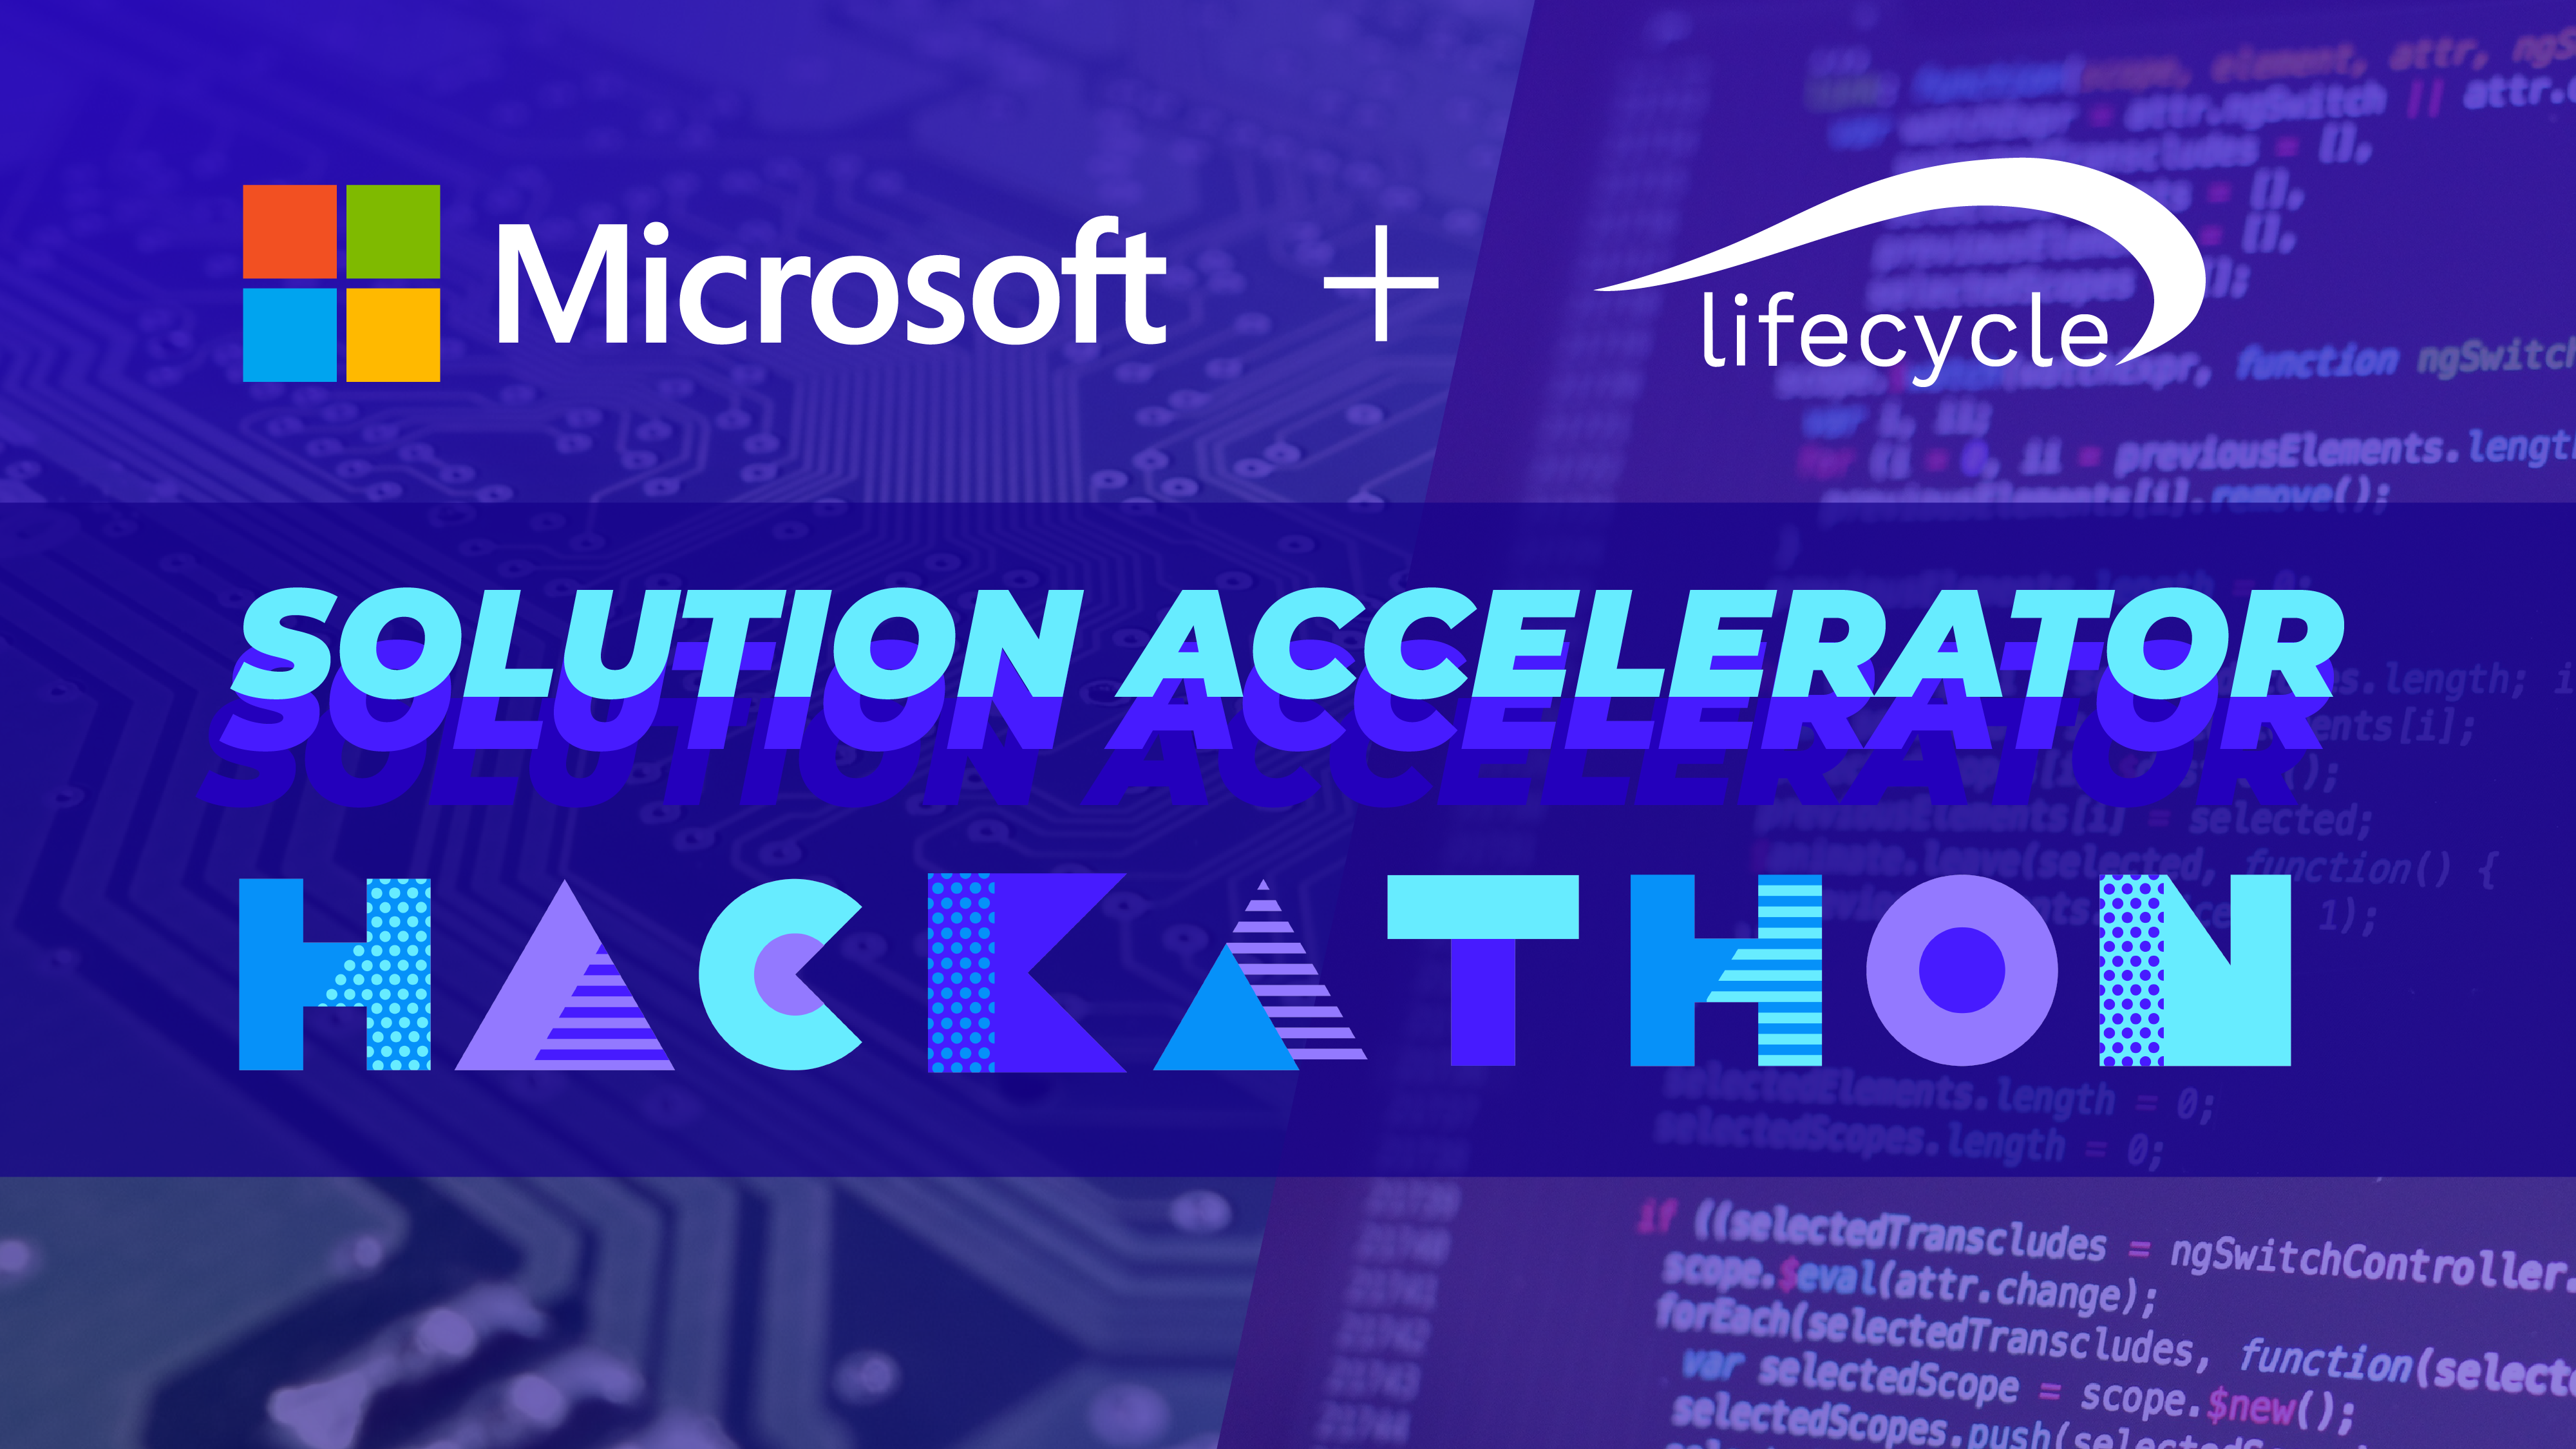 Lifecycle & Microsoft Solution Accelerator Hackathon Challenge